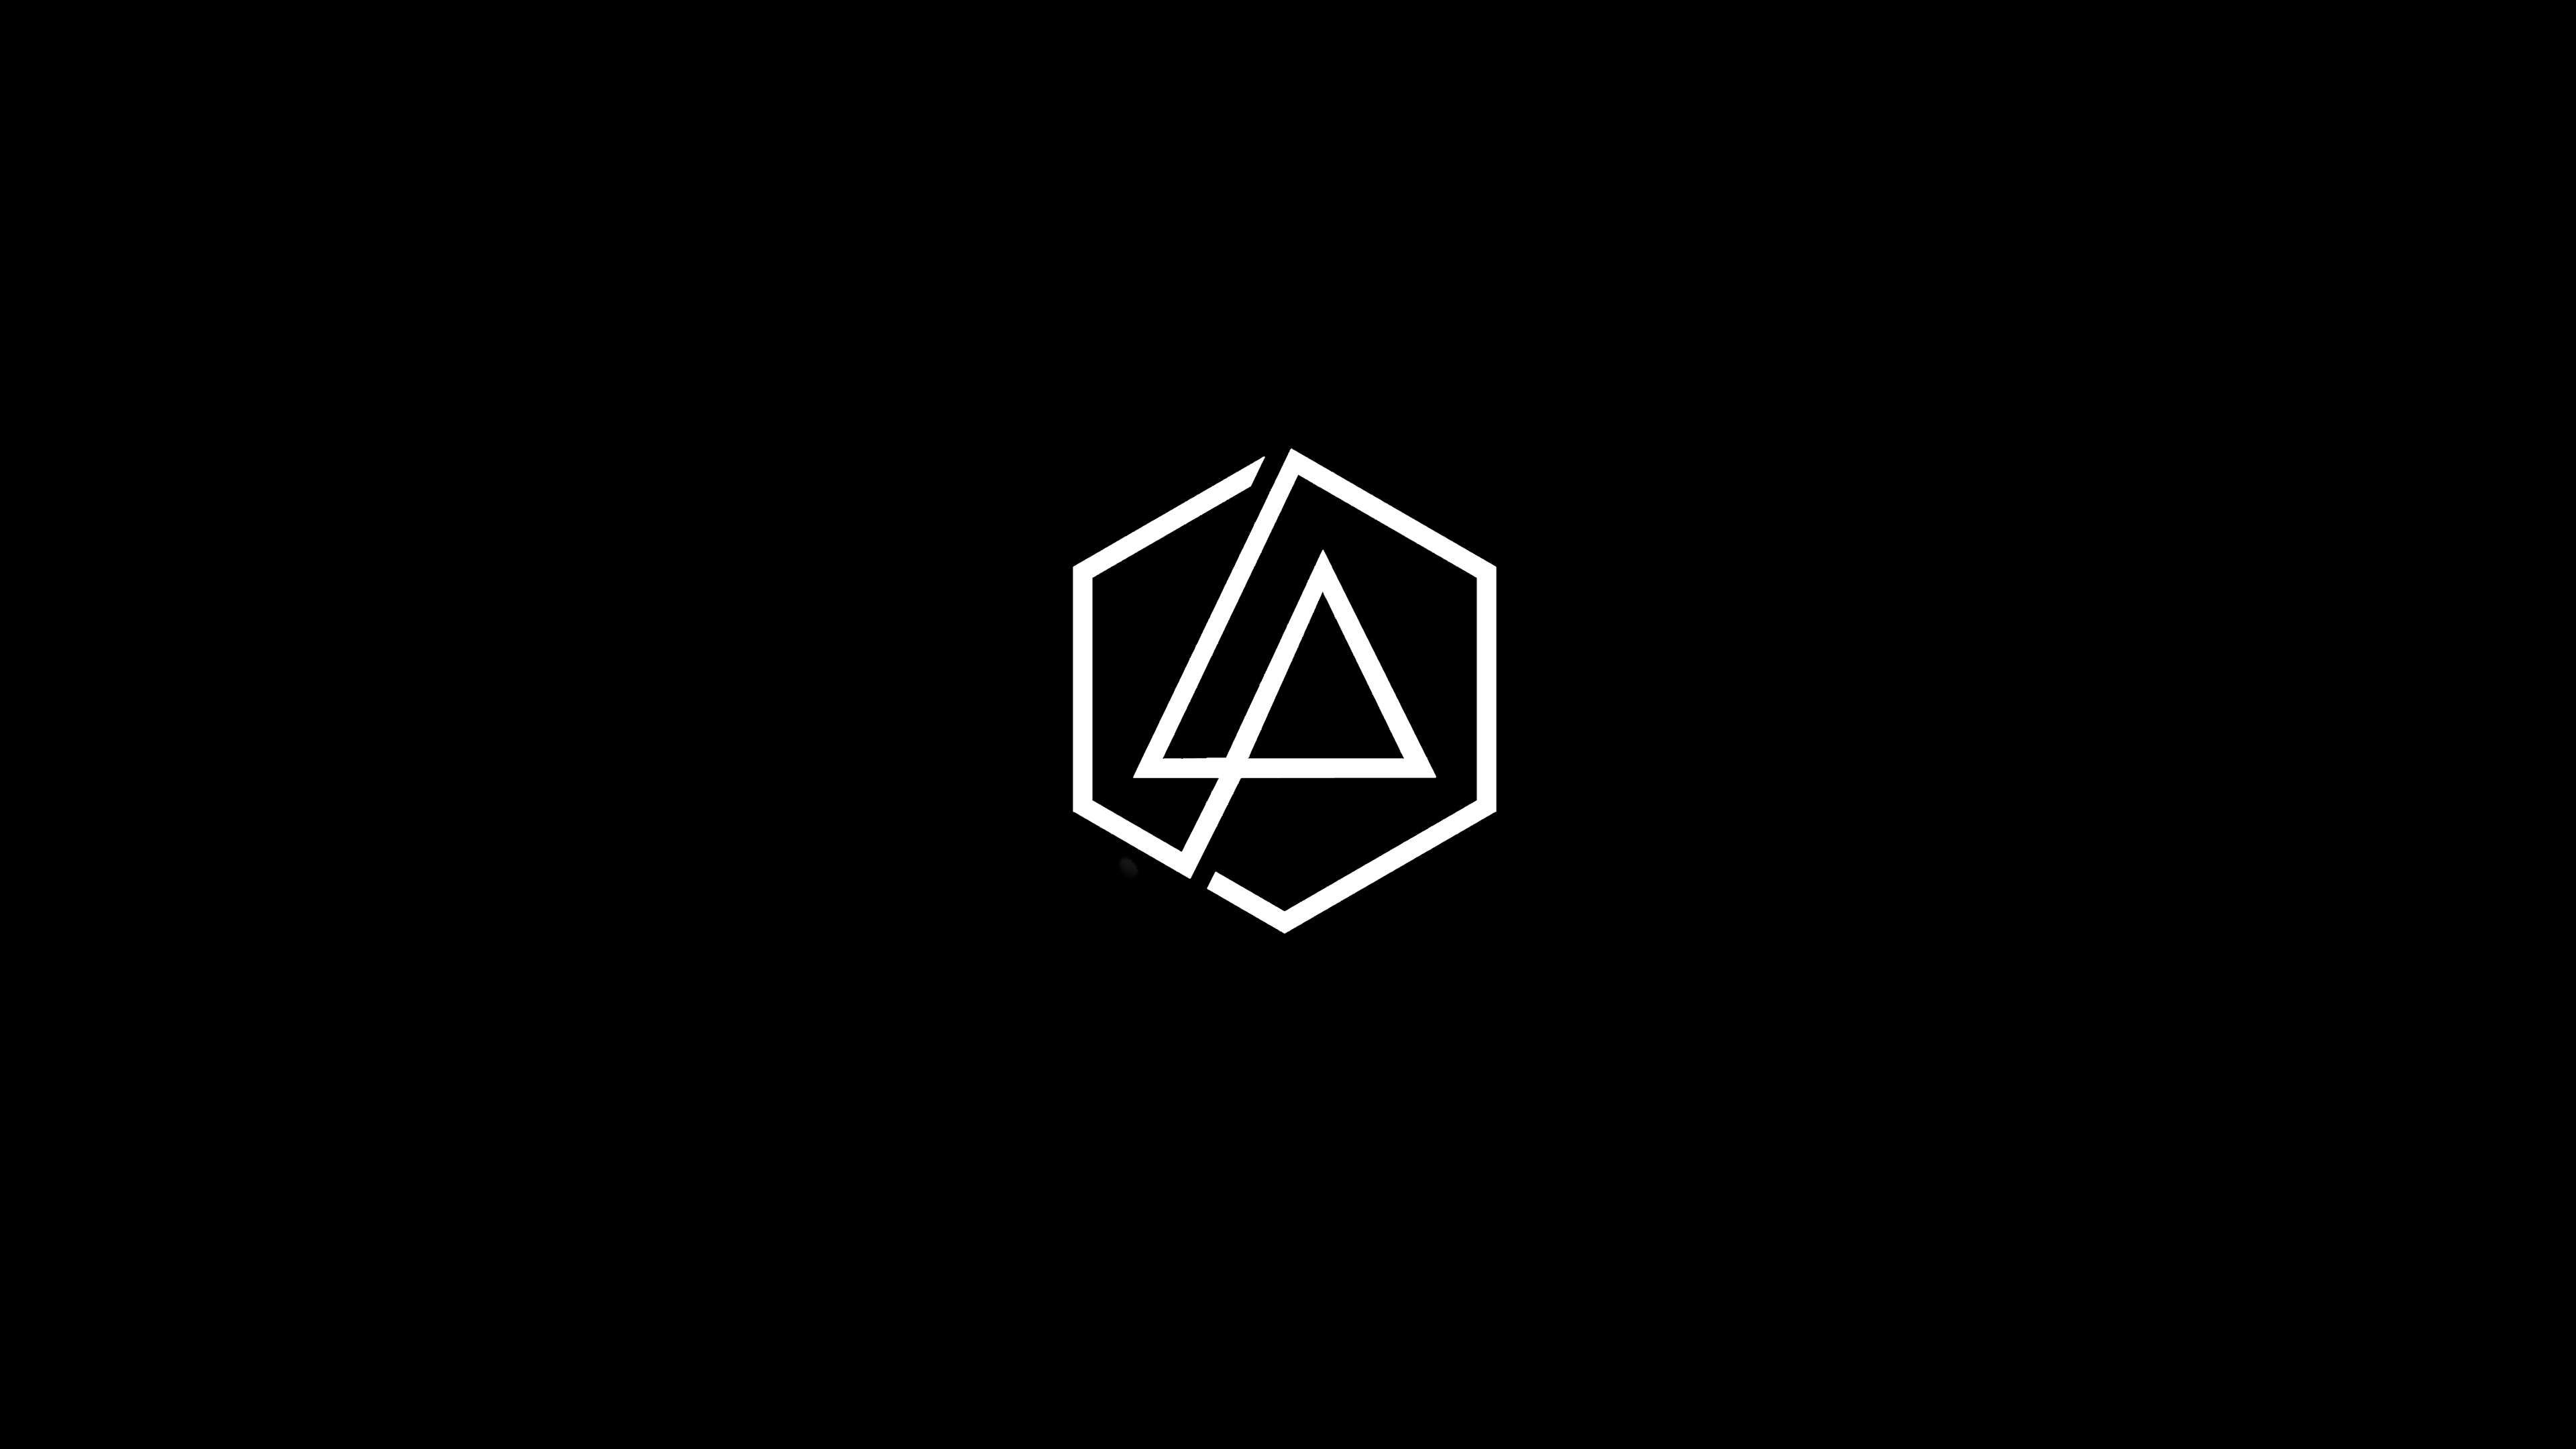 3840x2160 Linkin Park Logo 4k 4k HD 4k Wallpapers, Images ...